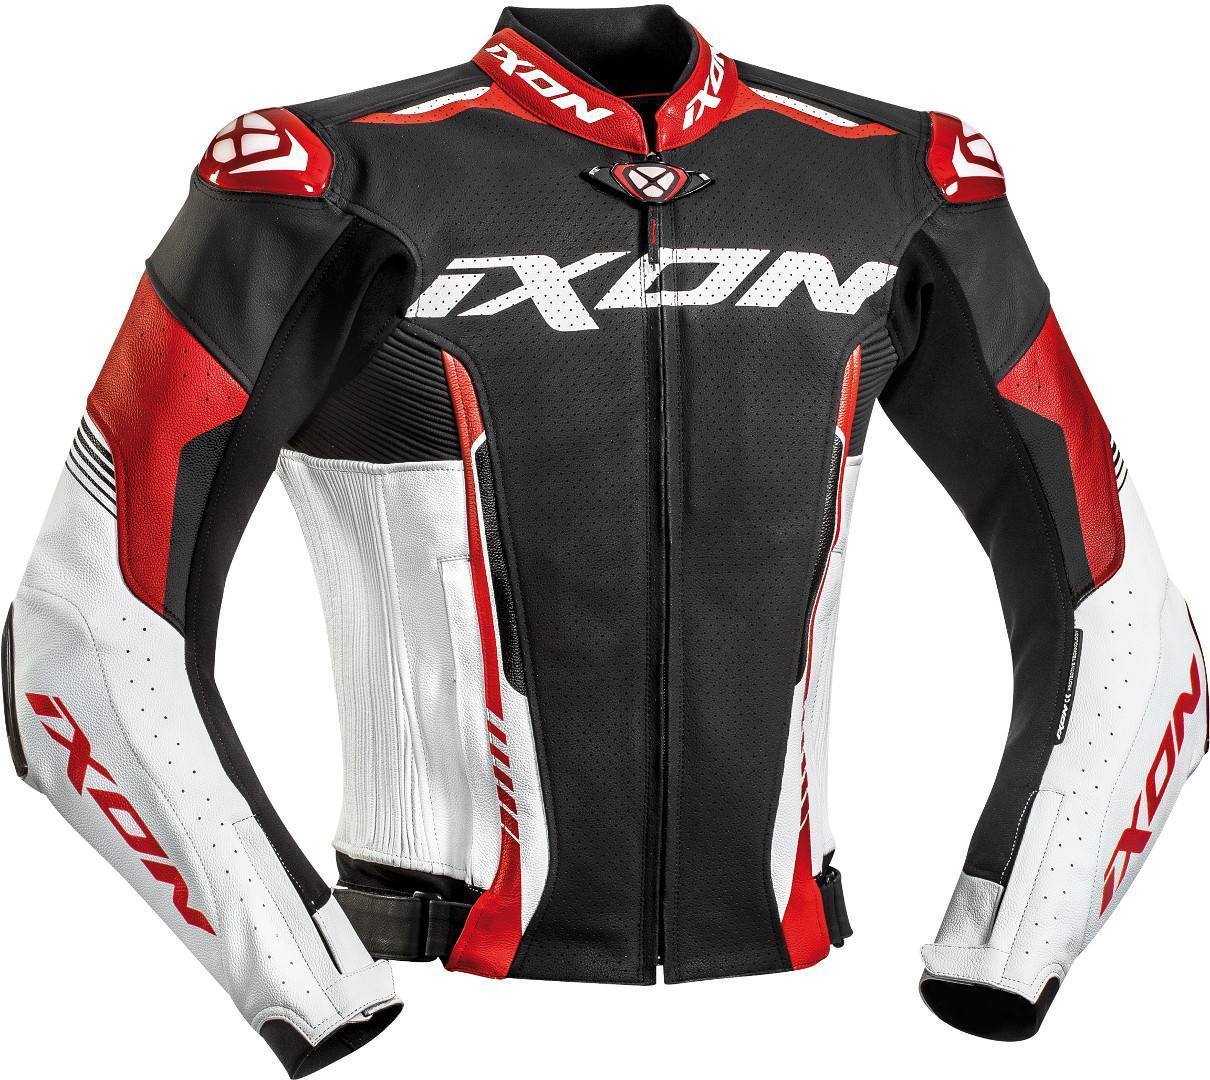 Ixon Vortex 2 Motorrad Lederjacke, schwarz-weiss-rot, Größe XL, schwarz-weiss-rot, Größe XL